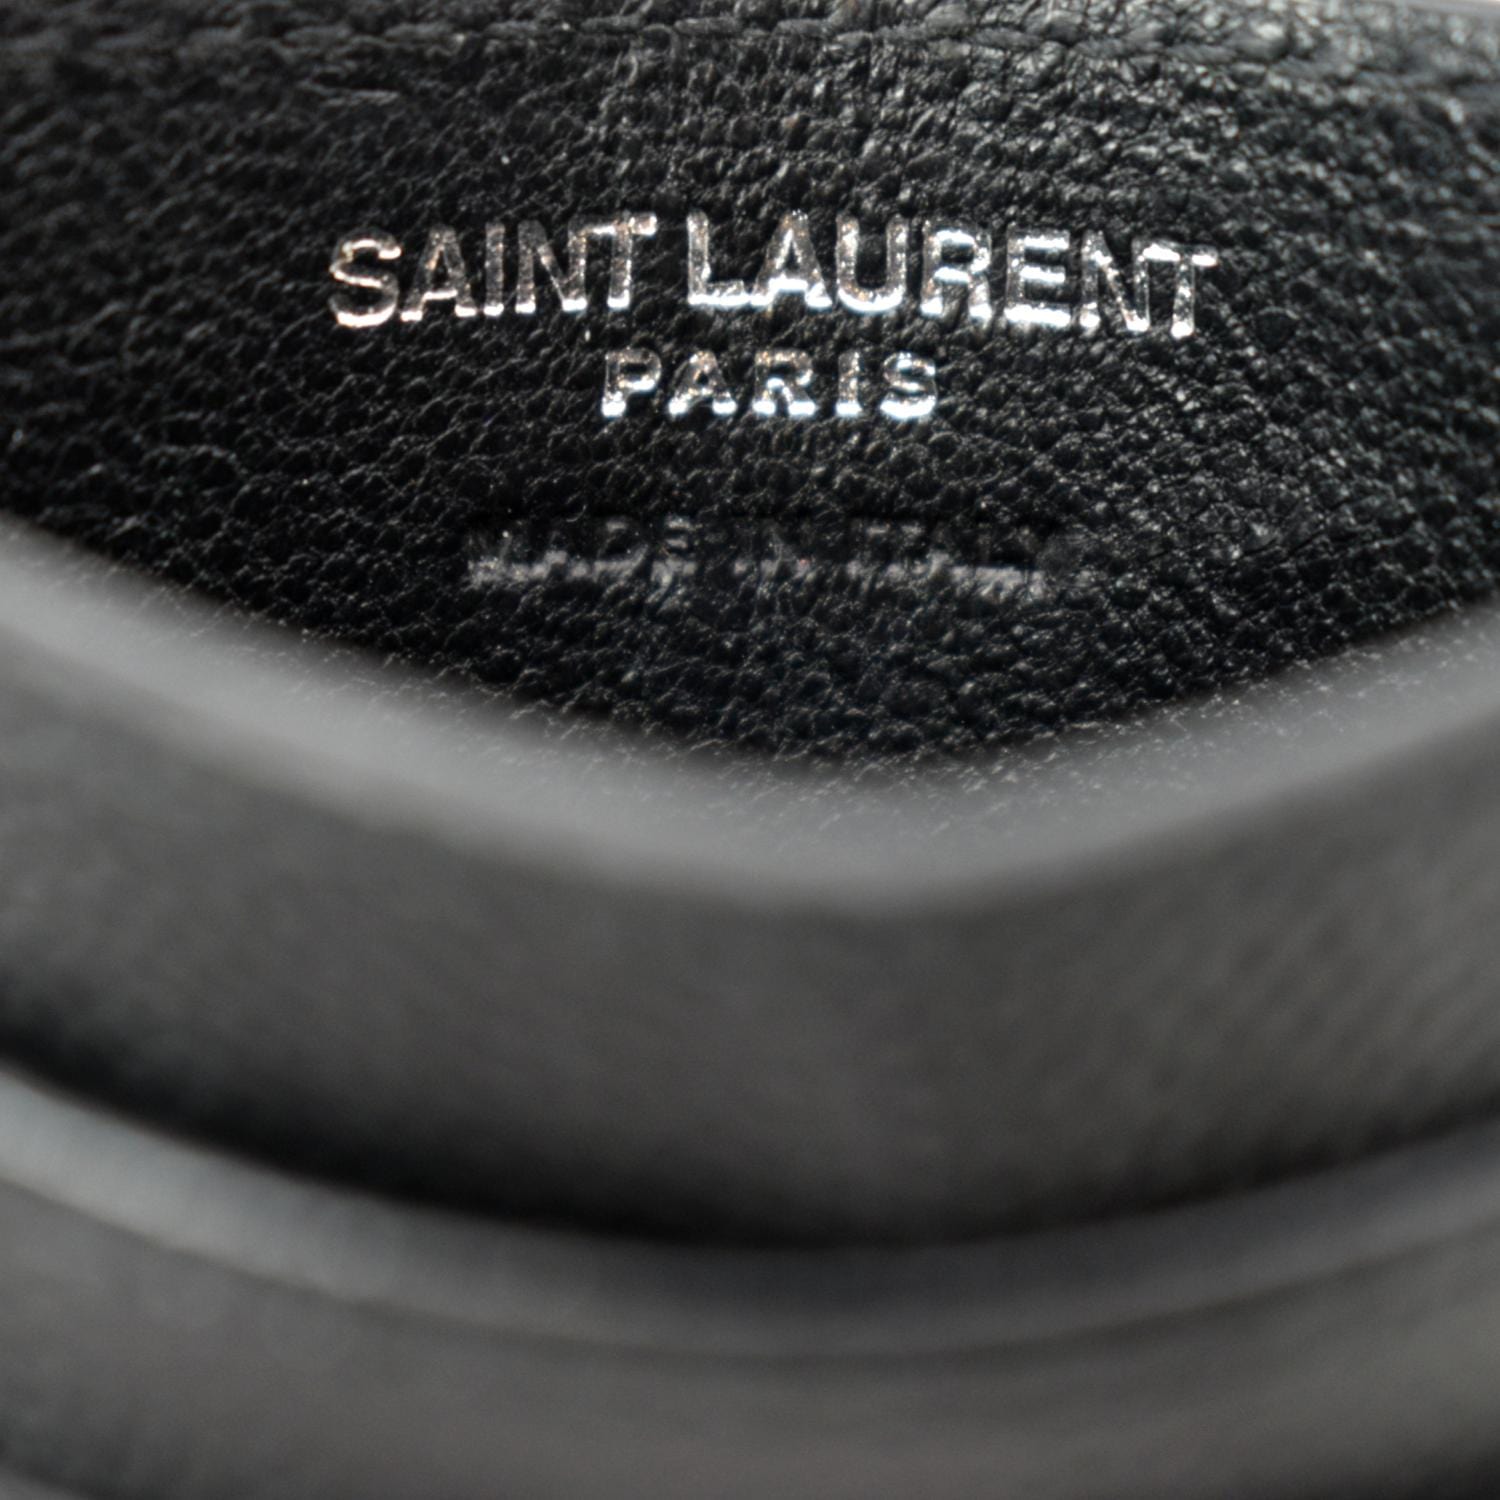 Paris Leather Card Case in Black - Saint Laurent